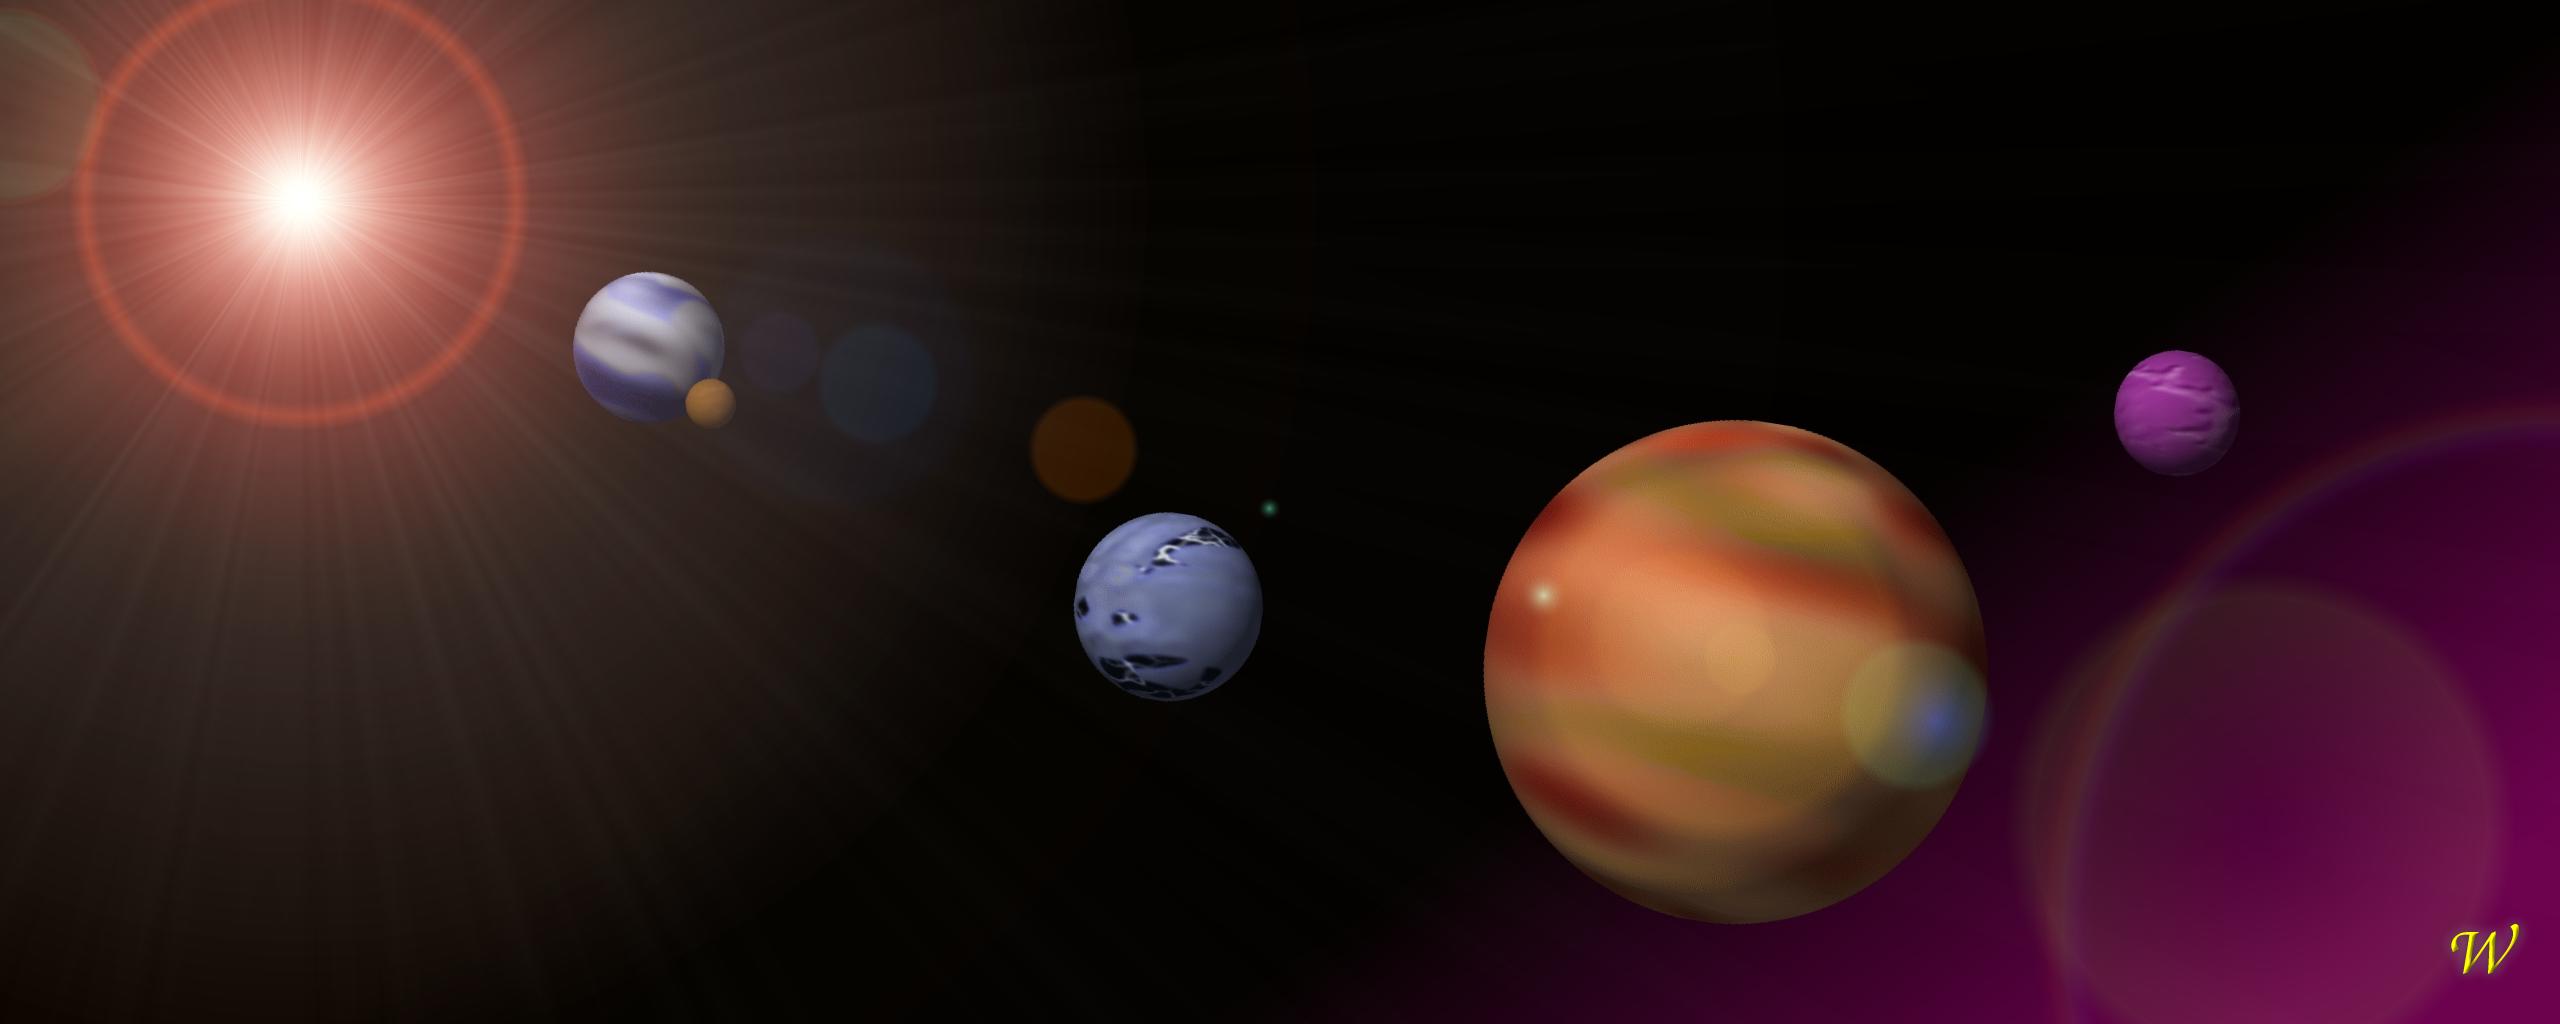 solar system planets 001 HD Wallpaper